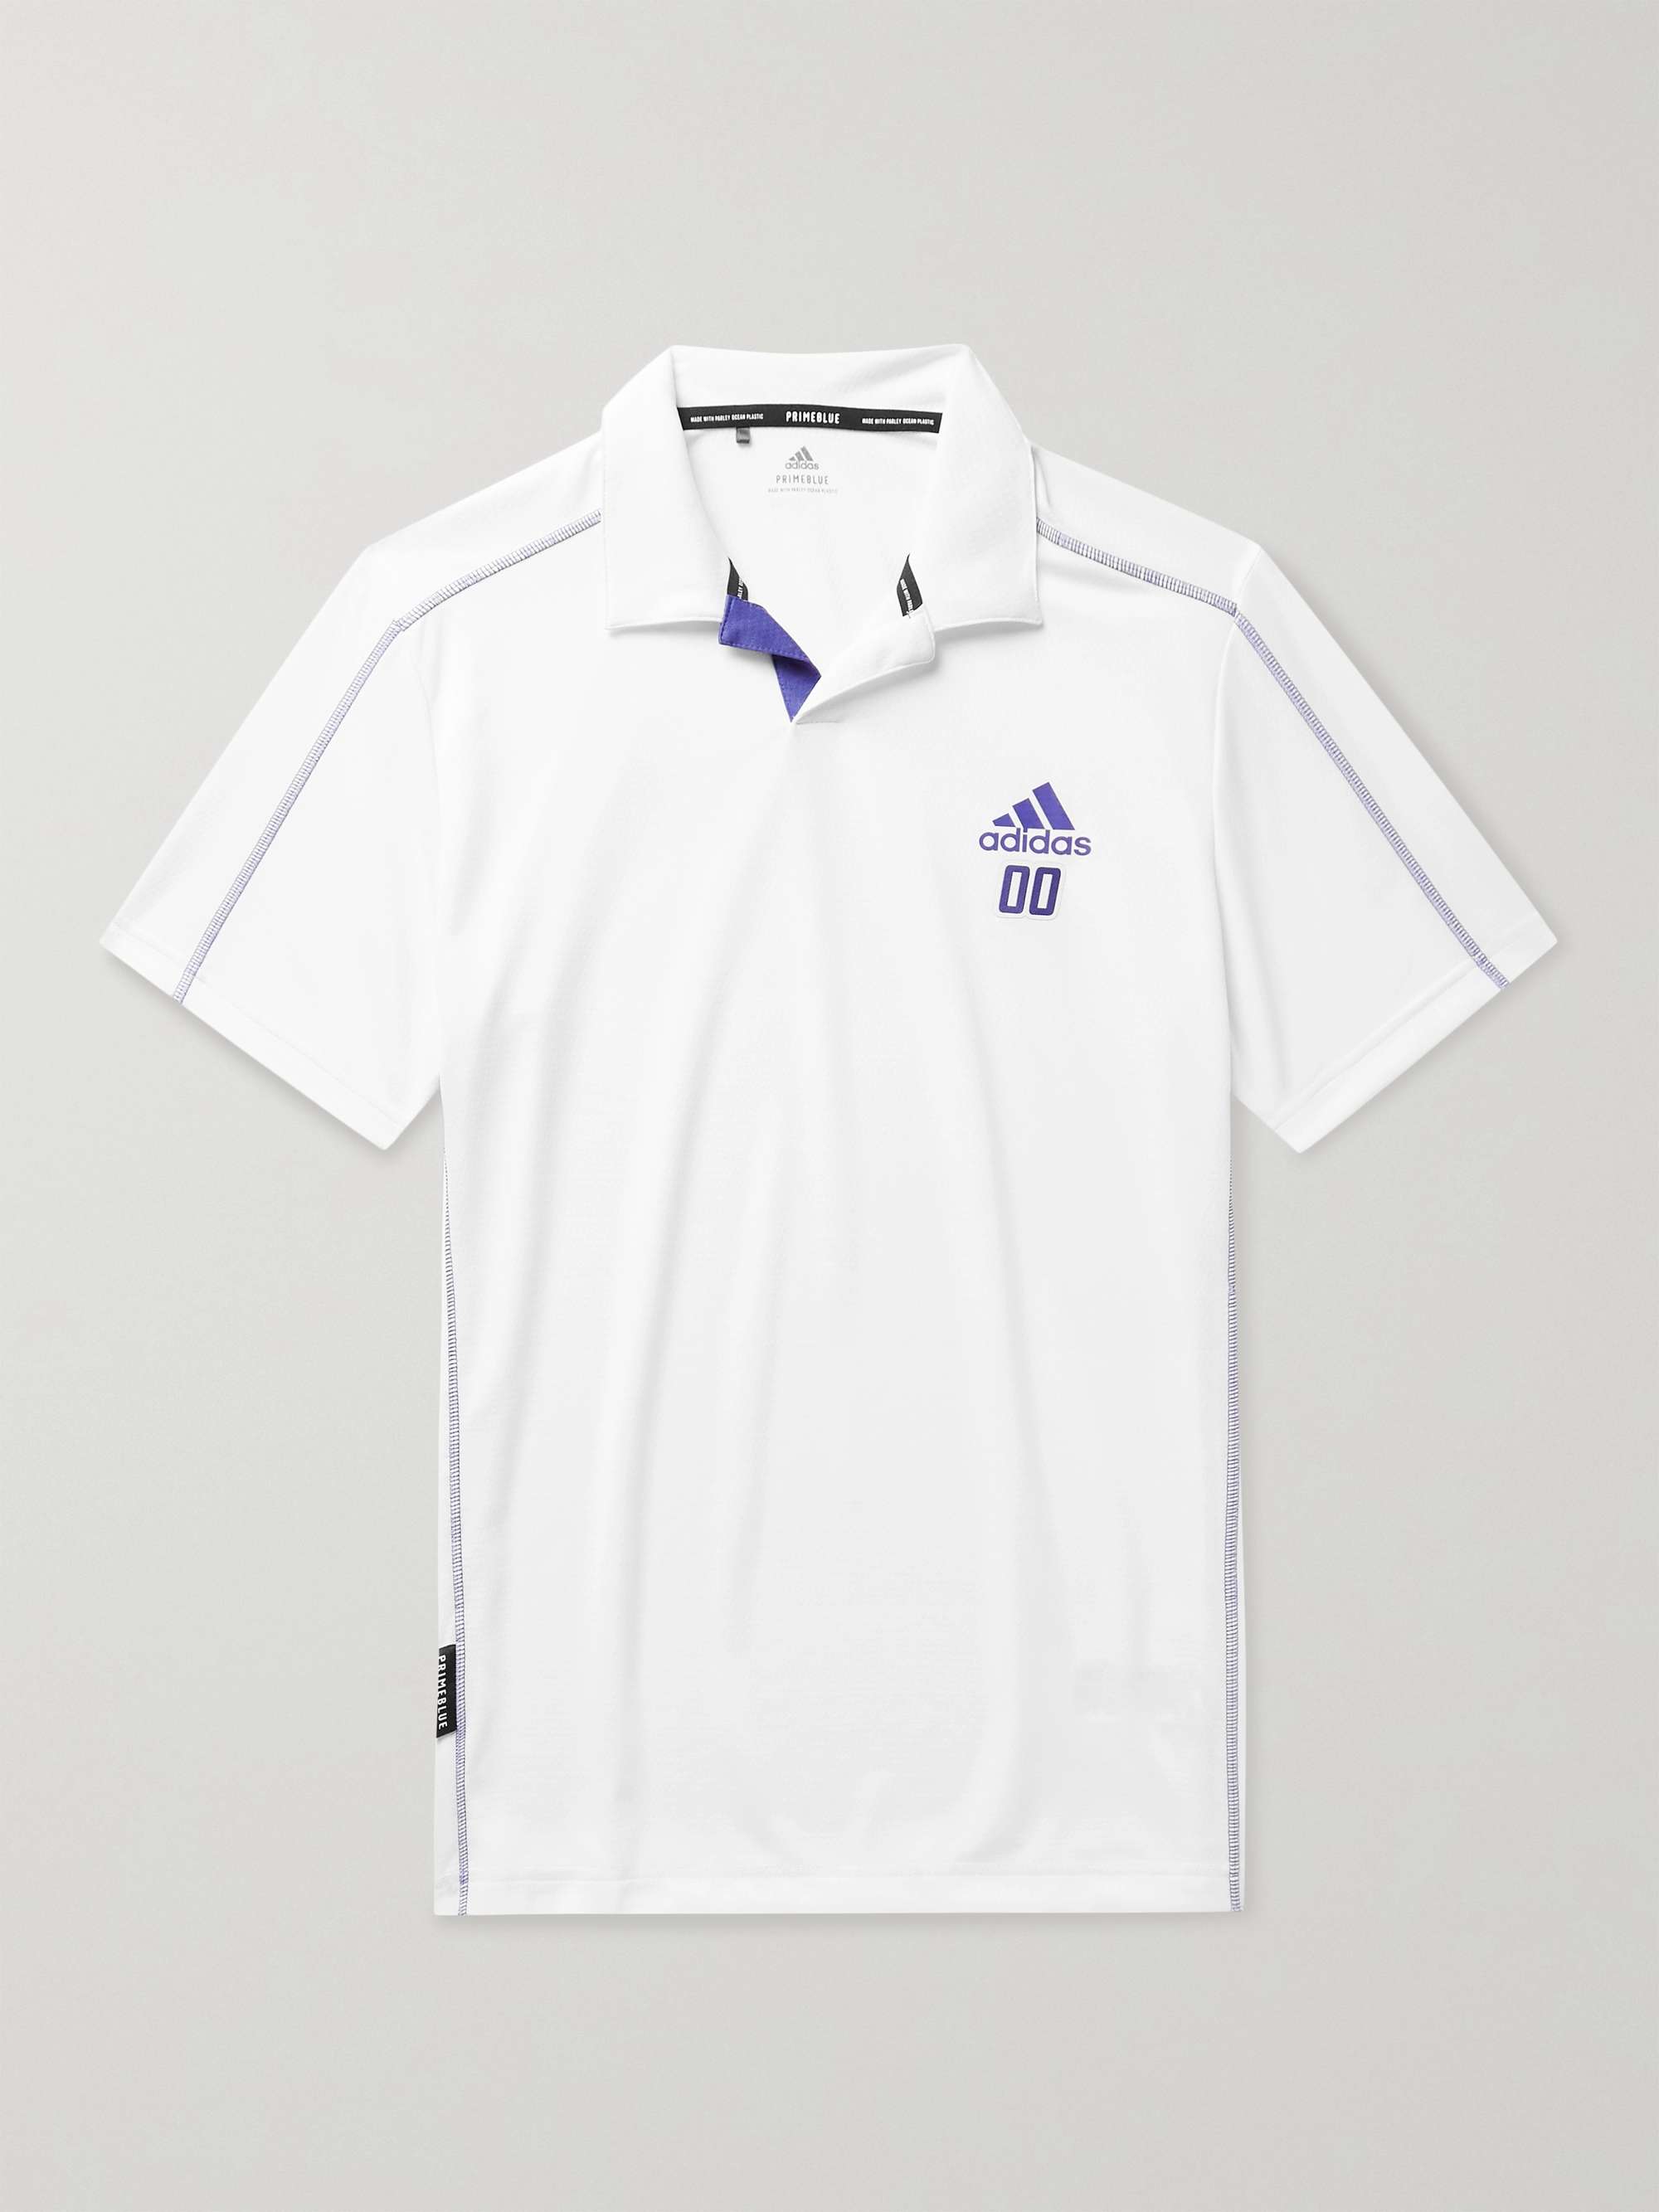 ADIDAS GOLF HEAT.RDY Recycled Primeblue Mesh Golf Polo Shirt